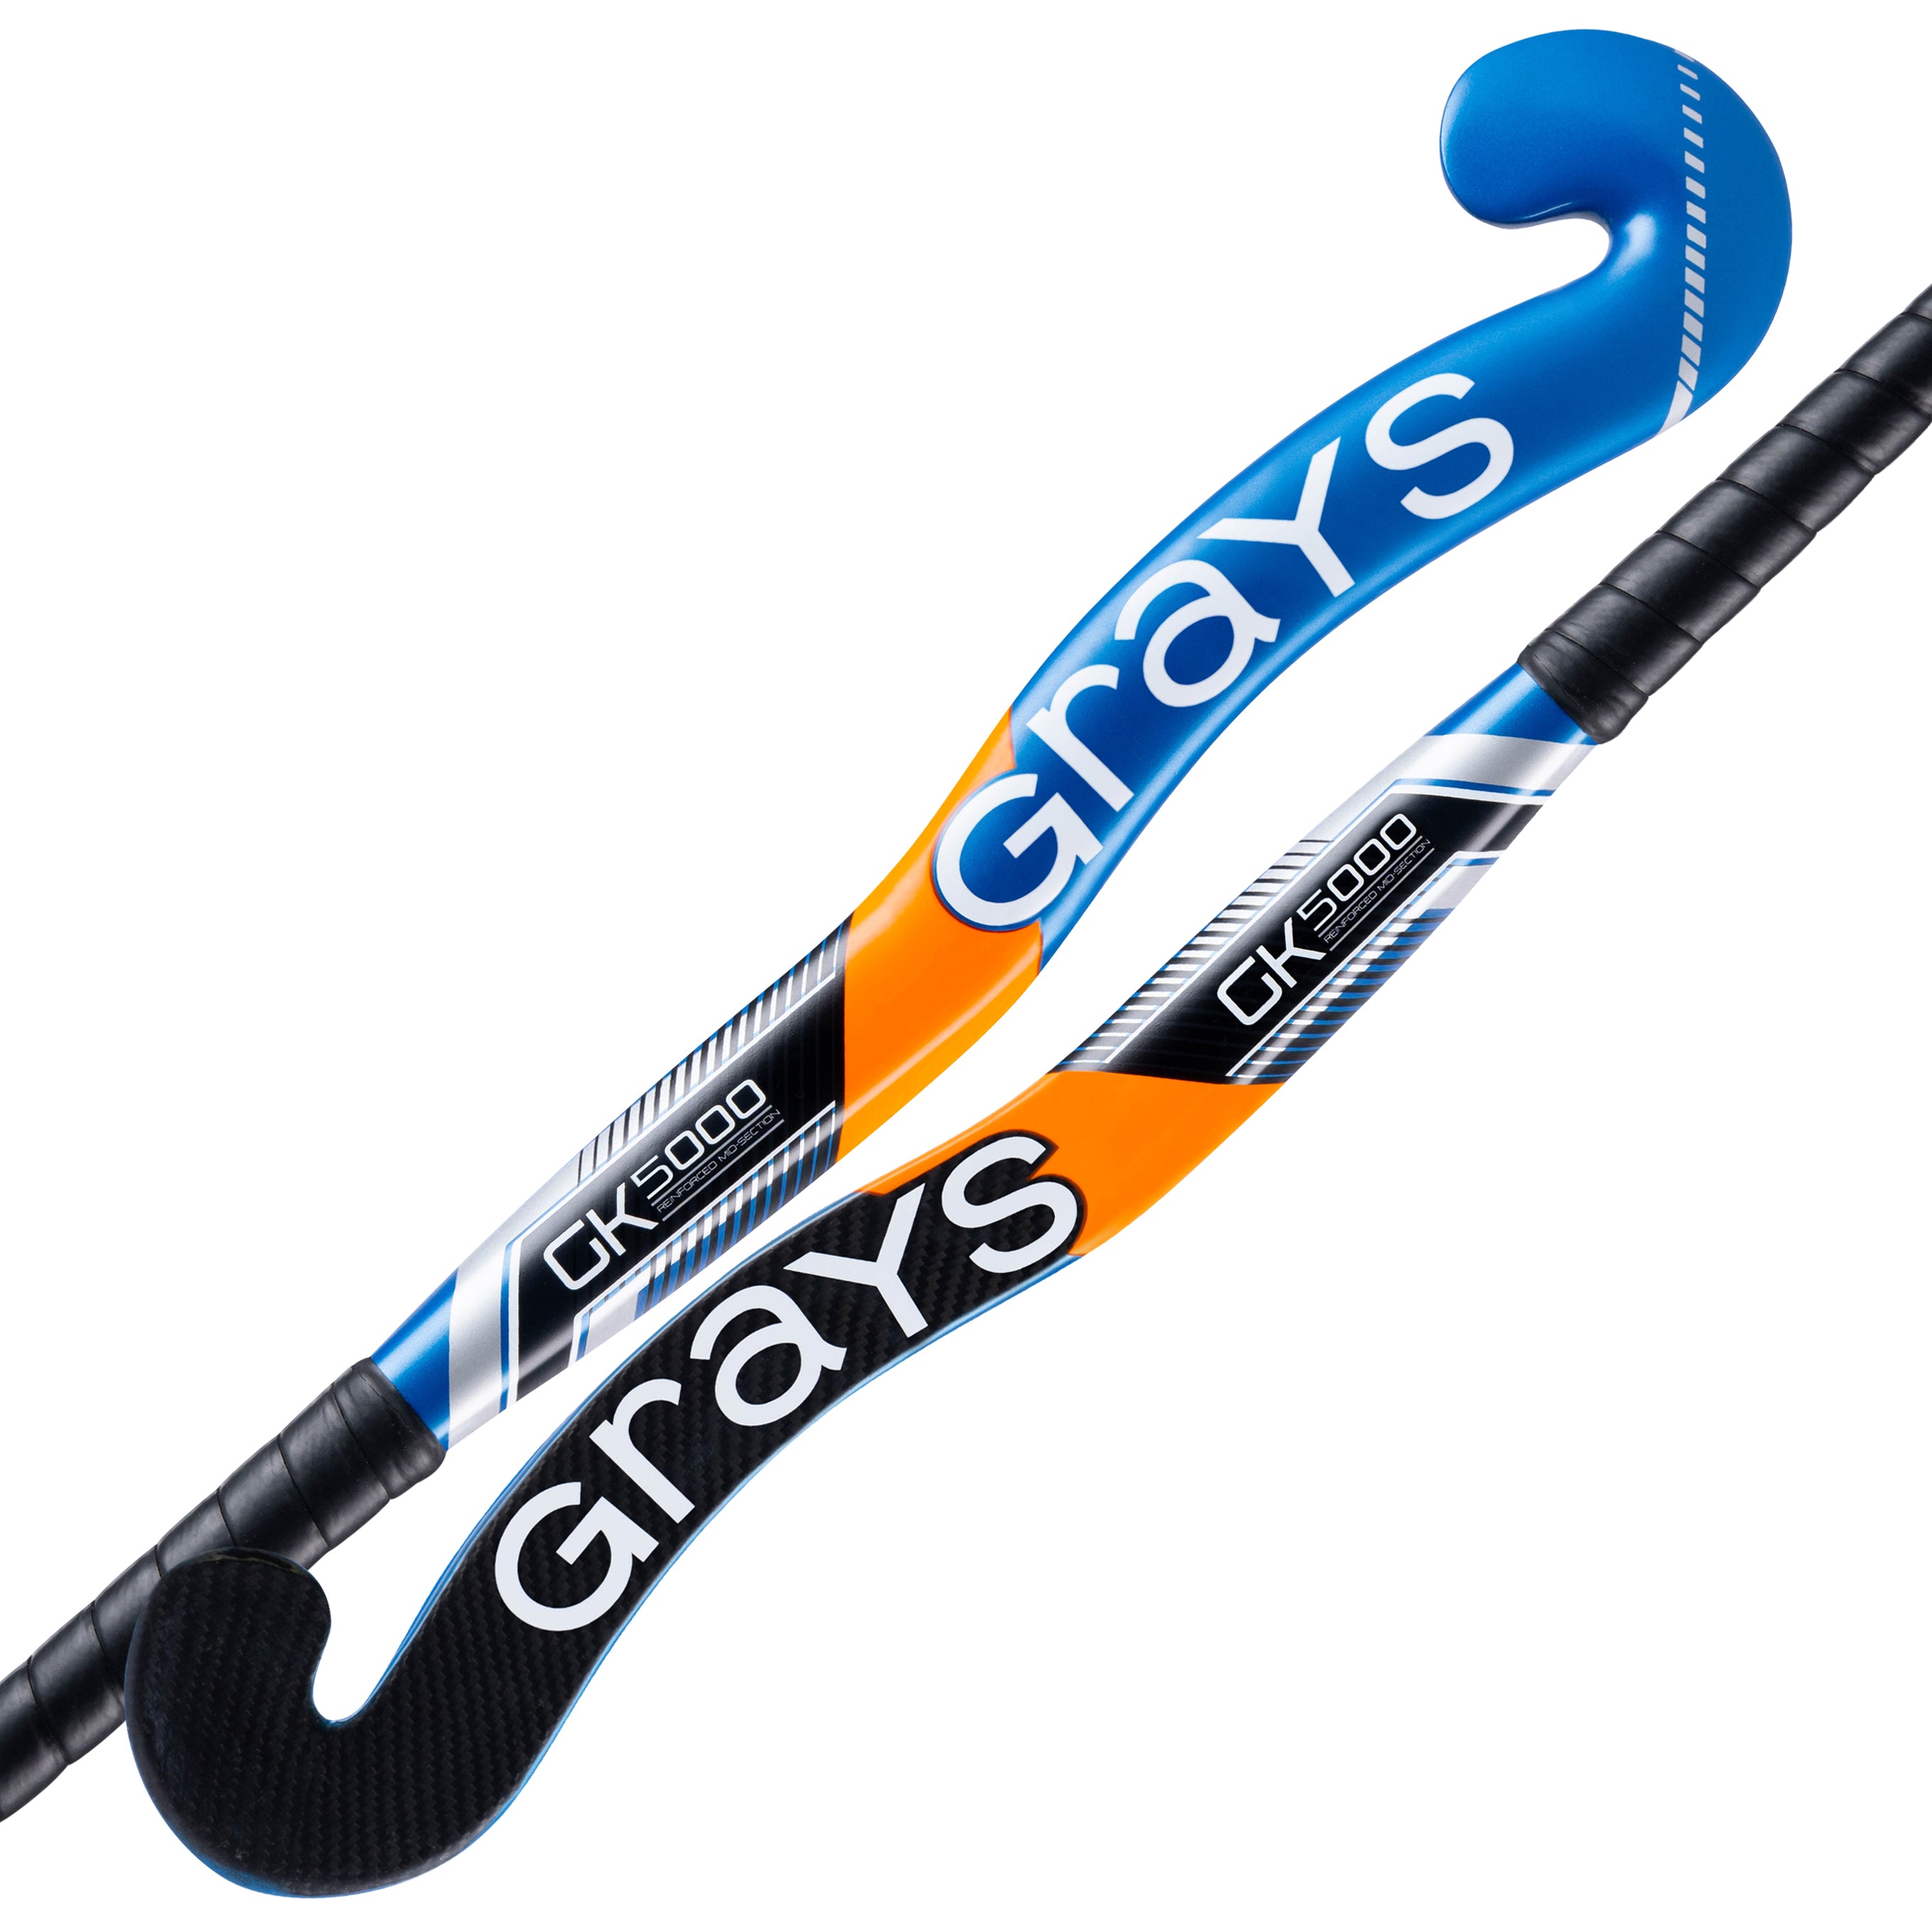 GK5000 Save Composite Goalie Hockey Stick